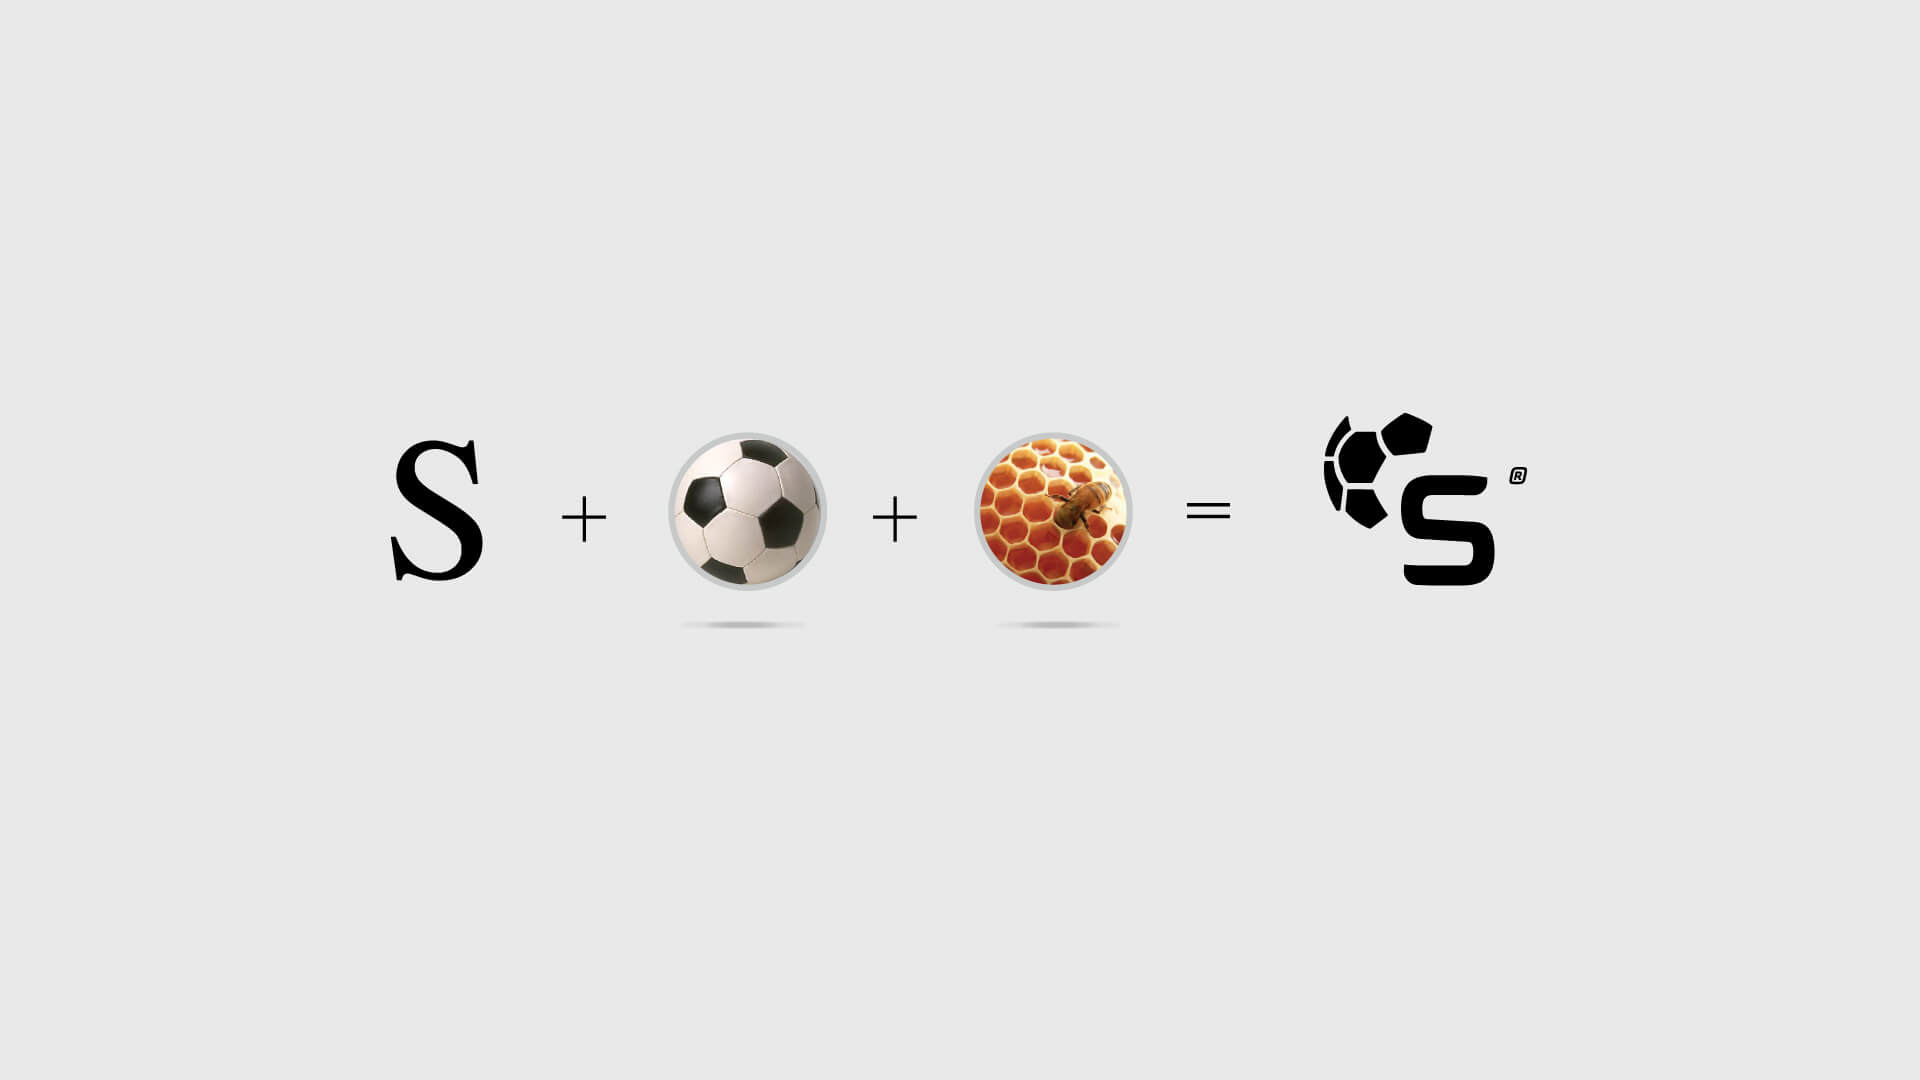 Soccerade_logo_1a